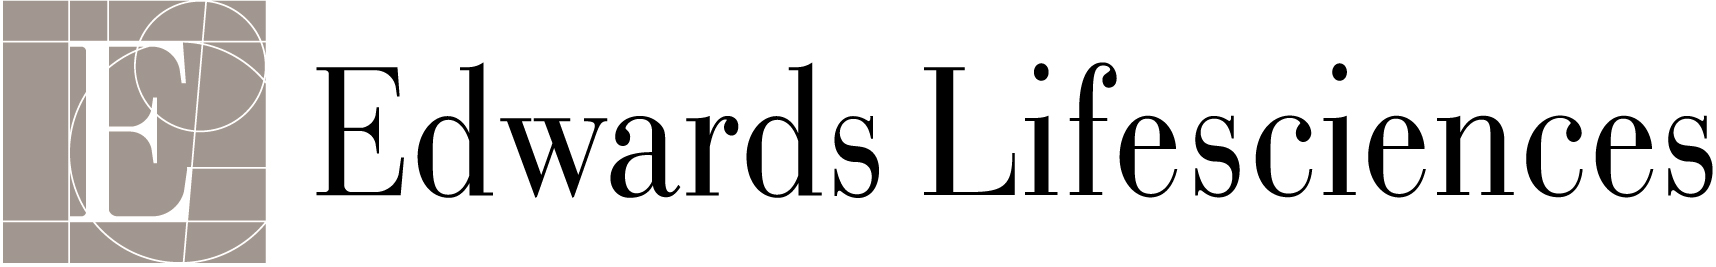 Edwards_LifeSciences_logo.jpg